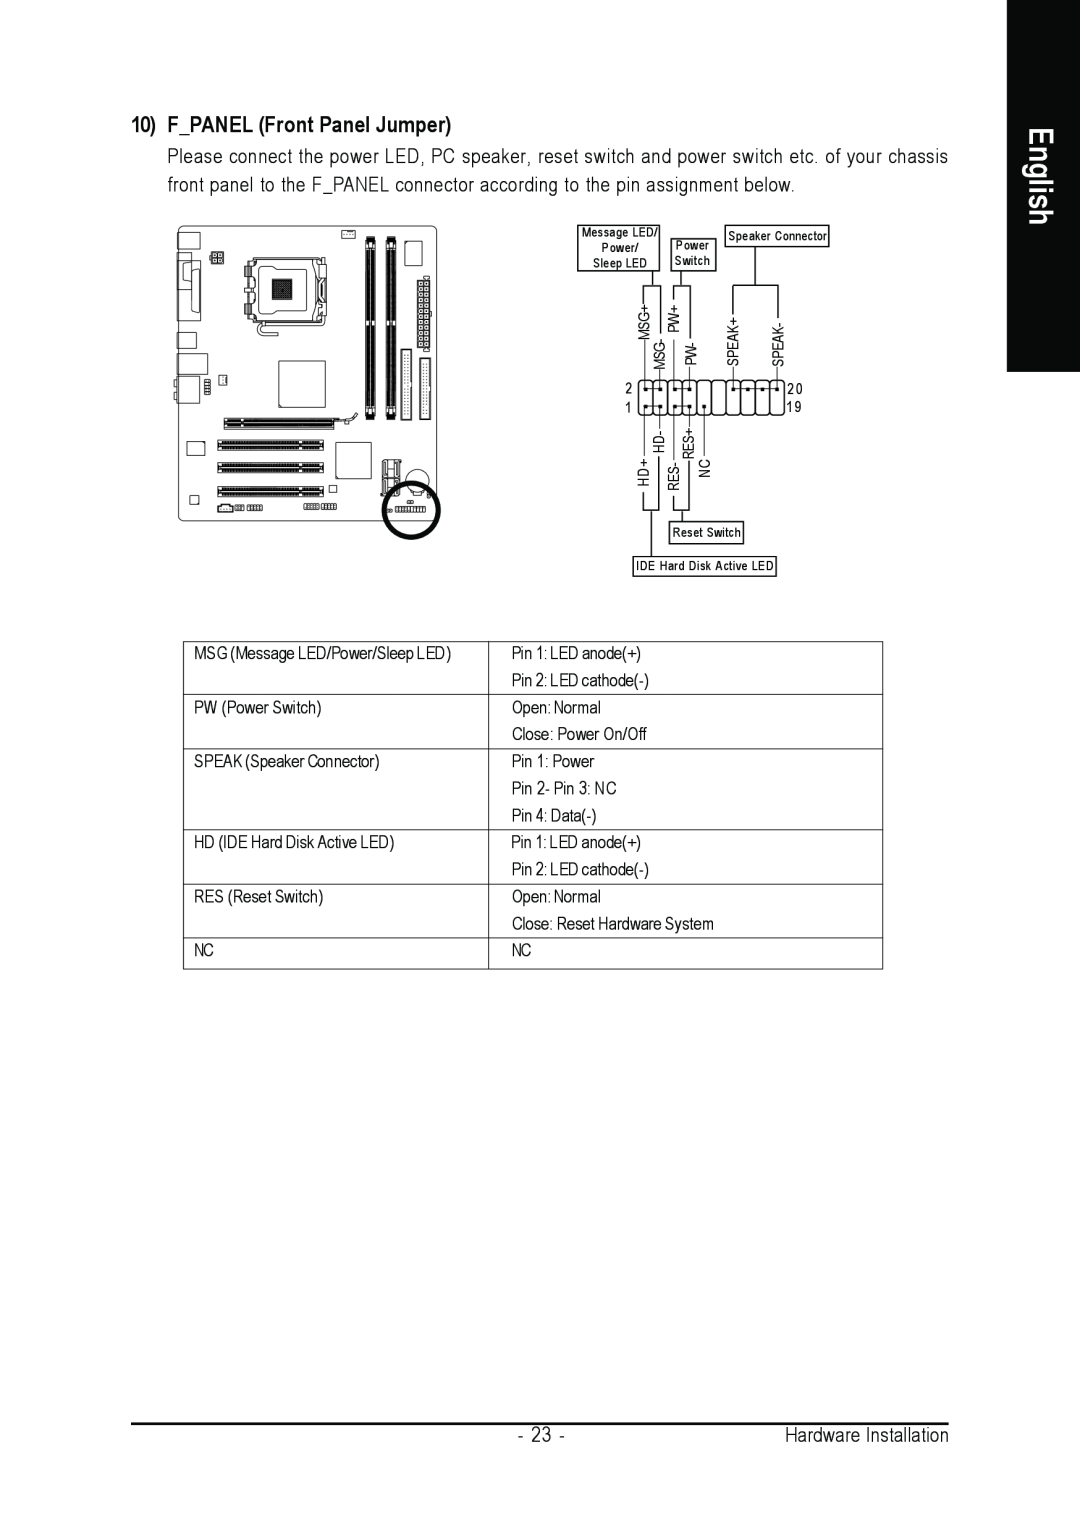 Gigabyte GA-945PLM-(D)S2 user manual FPANEL Front Panel Jumper, English, Message LED, Speaker Connector, Sleep LED, Switch 